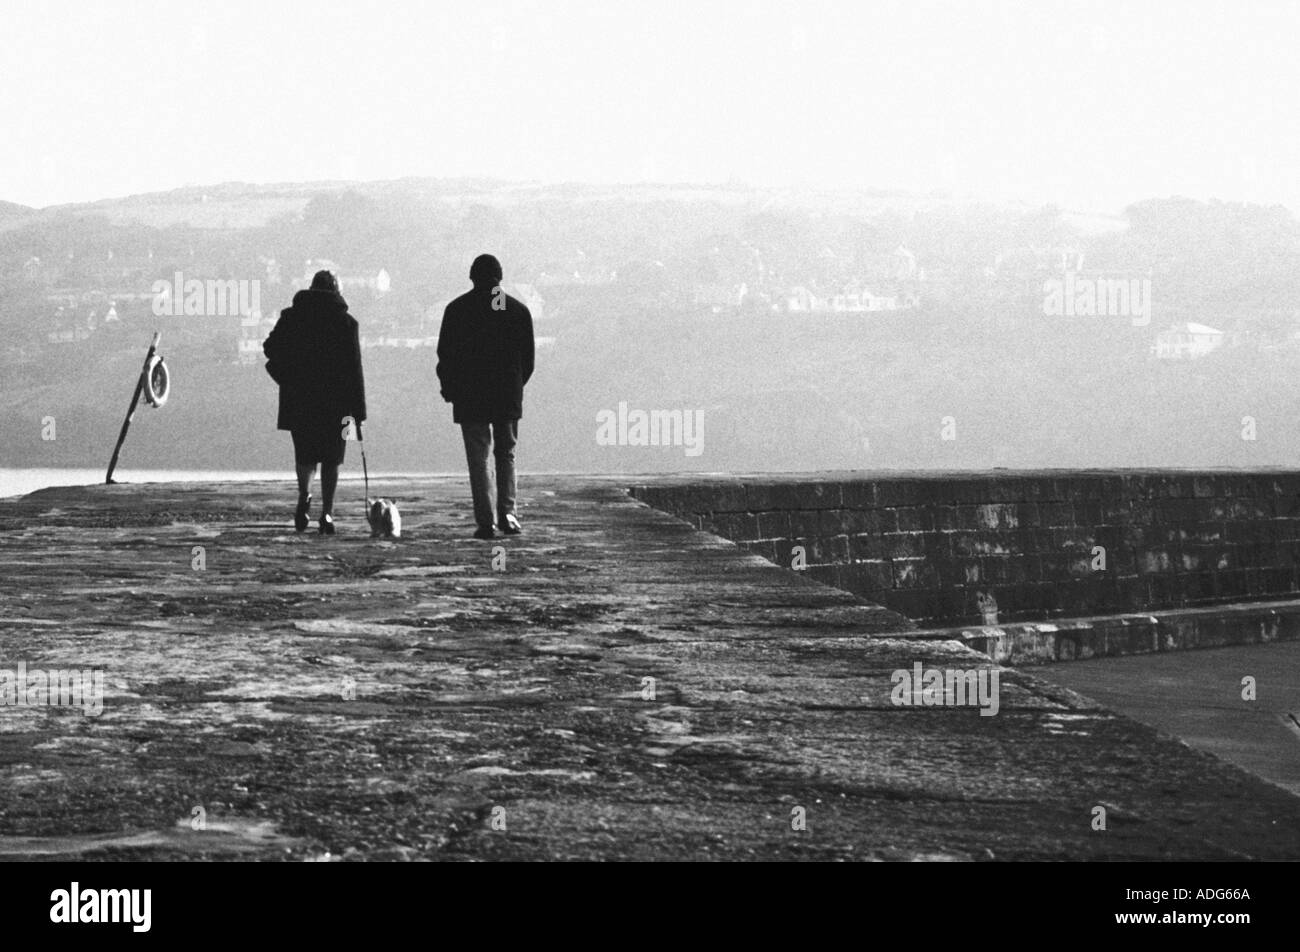 Two people walking along a path B W Stock Photo